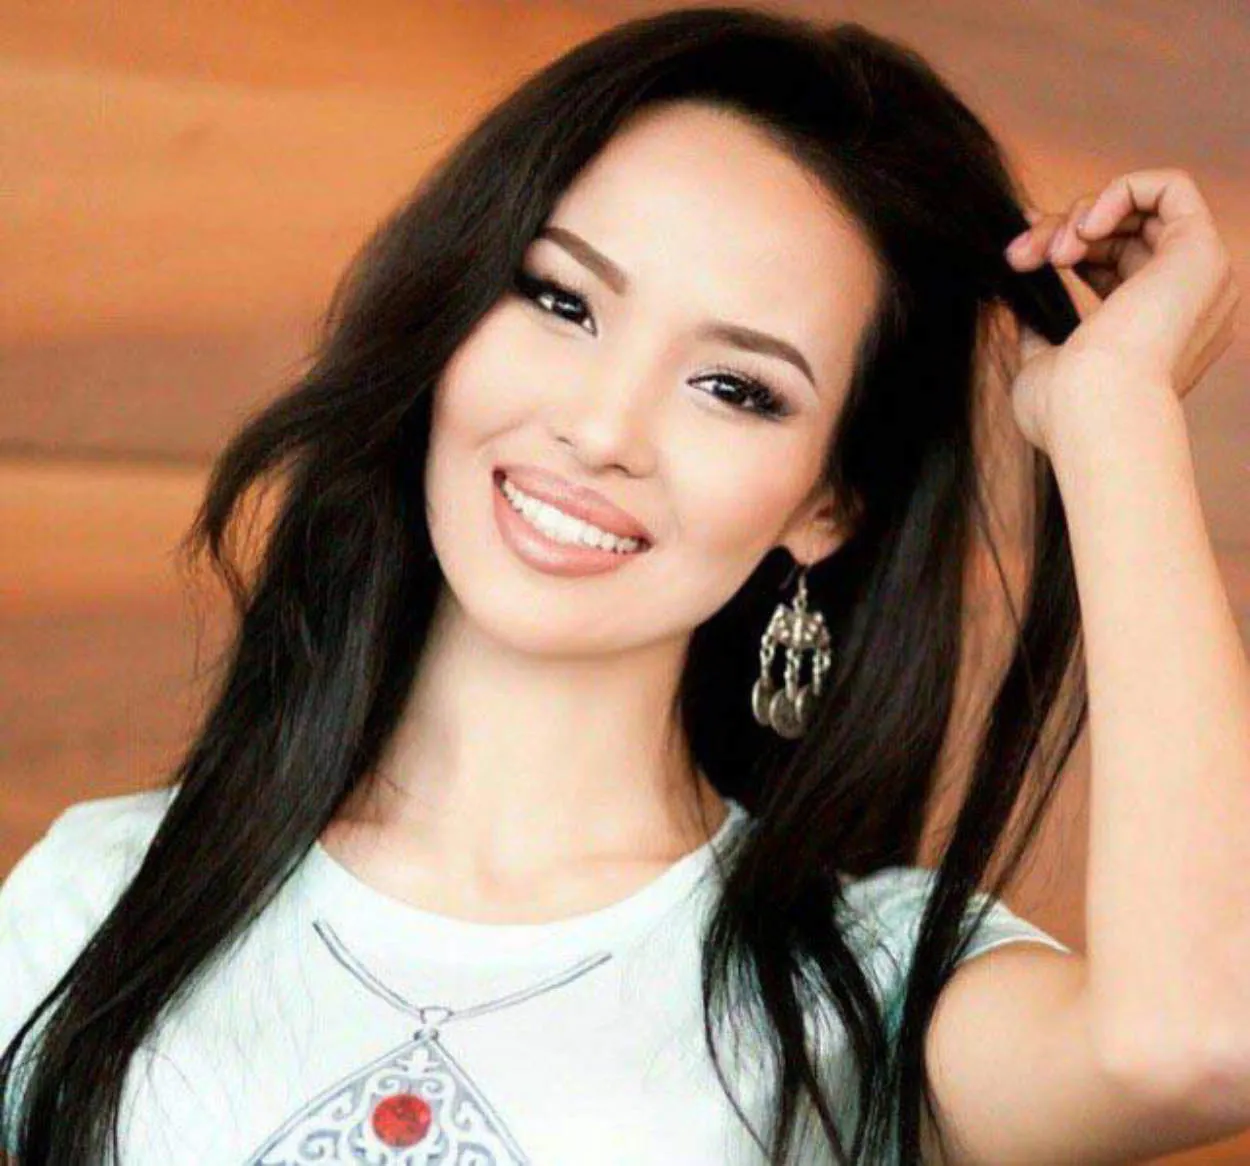 Kazakhstan beautiful woman or selebgram